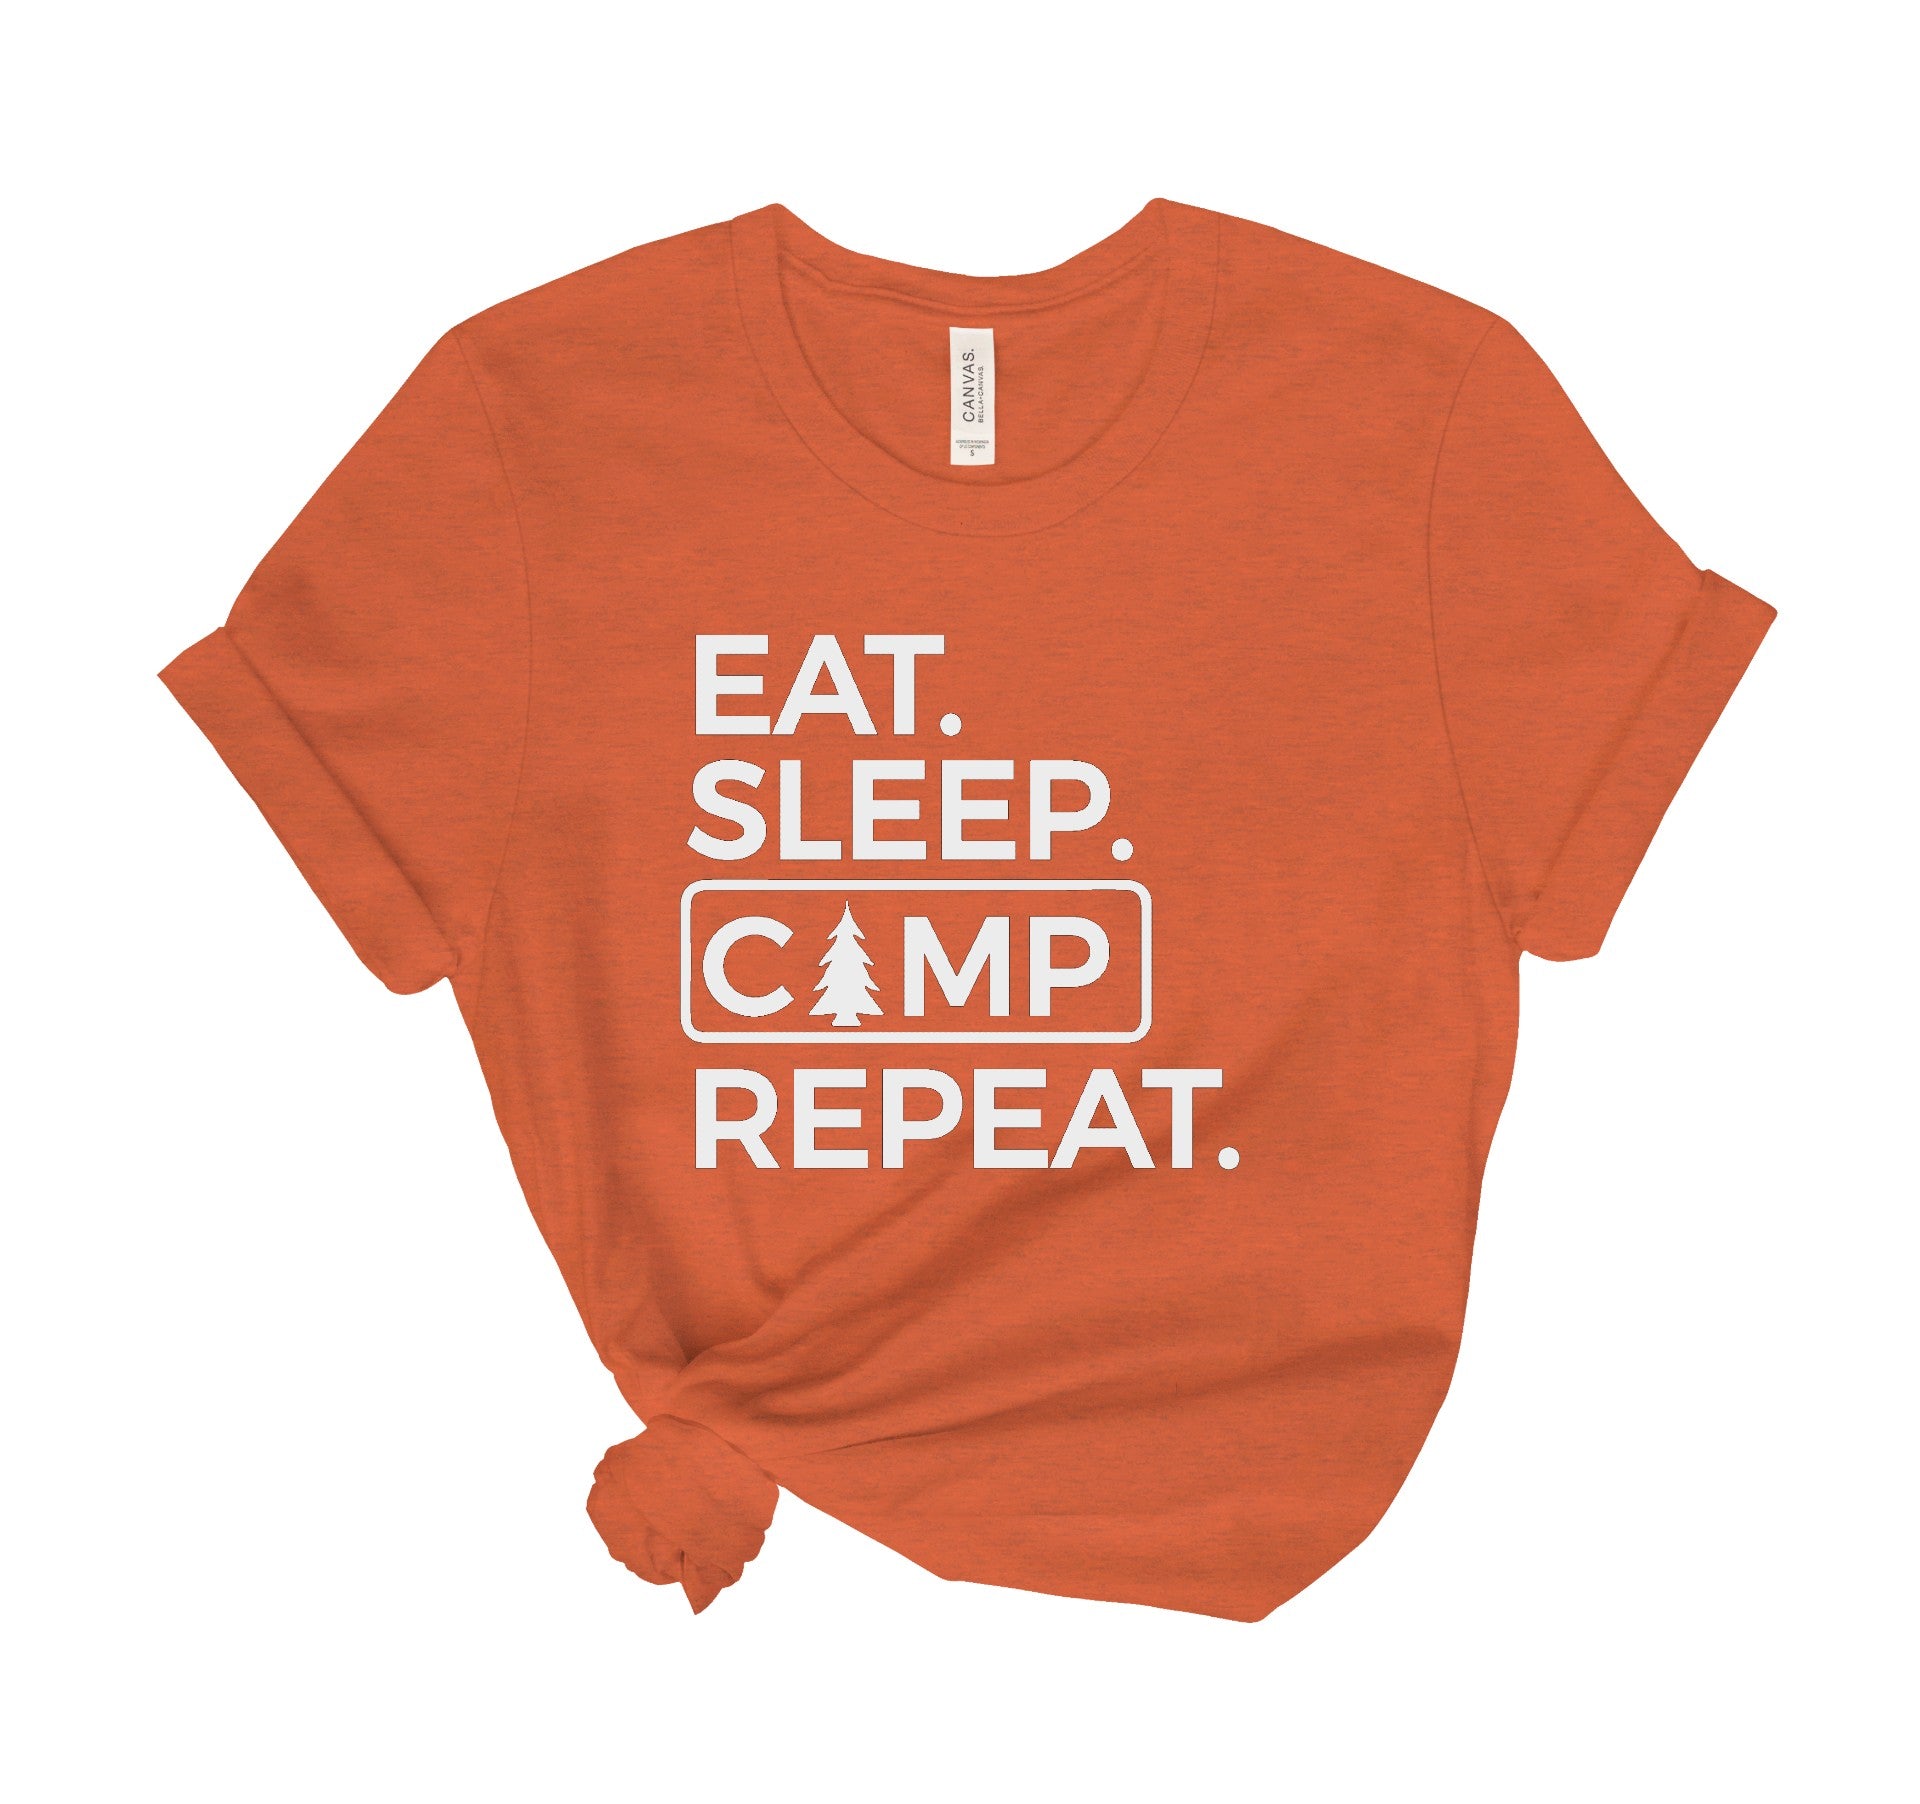 Eat Sleep Camp Repeat Heathered Tee Shirt